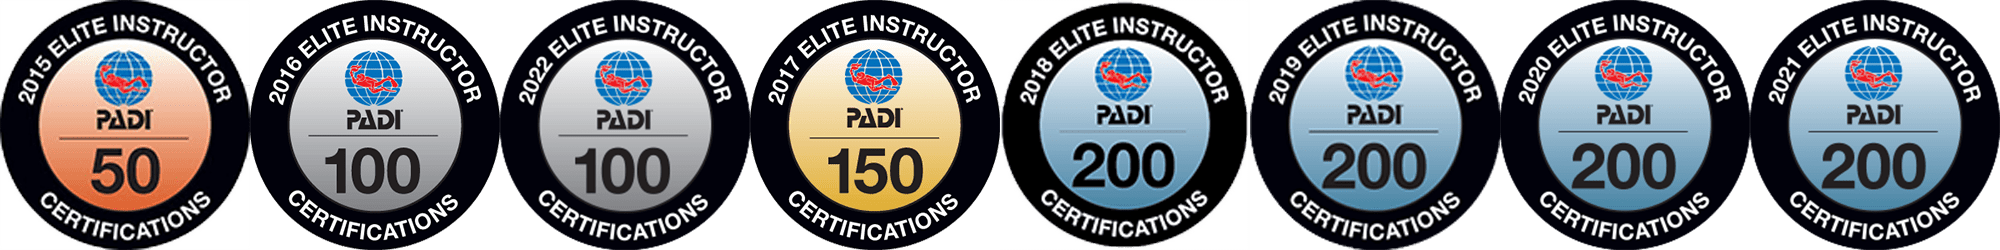 PADI Elite Instructor Badge